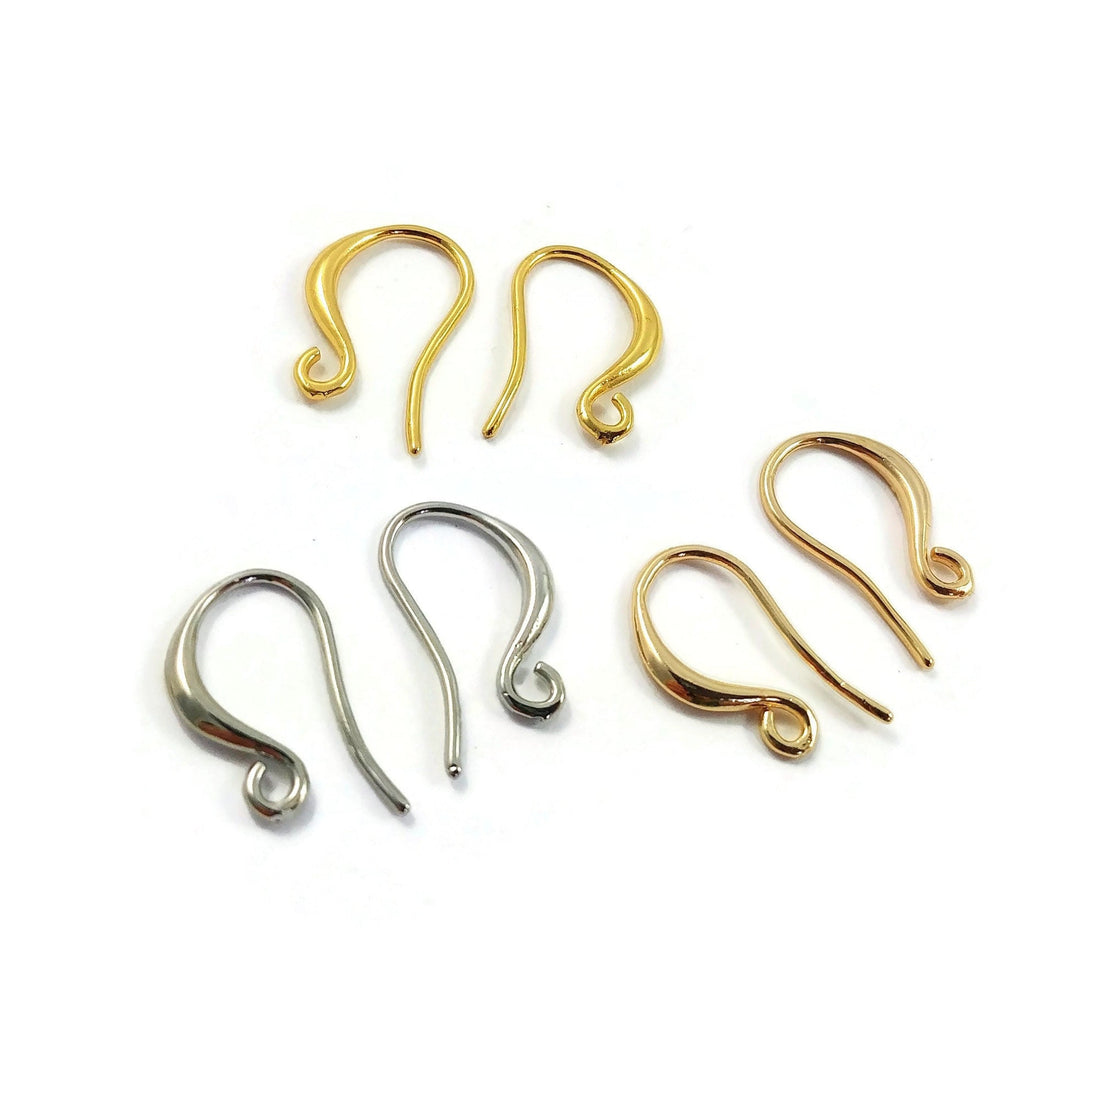 Nickel free earring hooks, Gold and silver brass ear wire, Hypoallergenic jewelry making